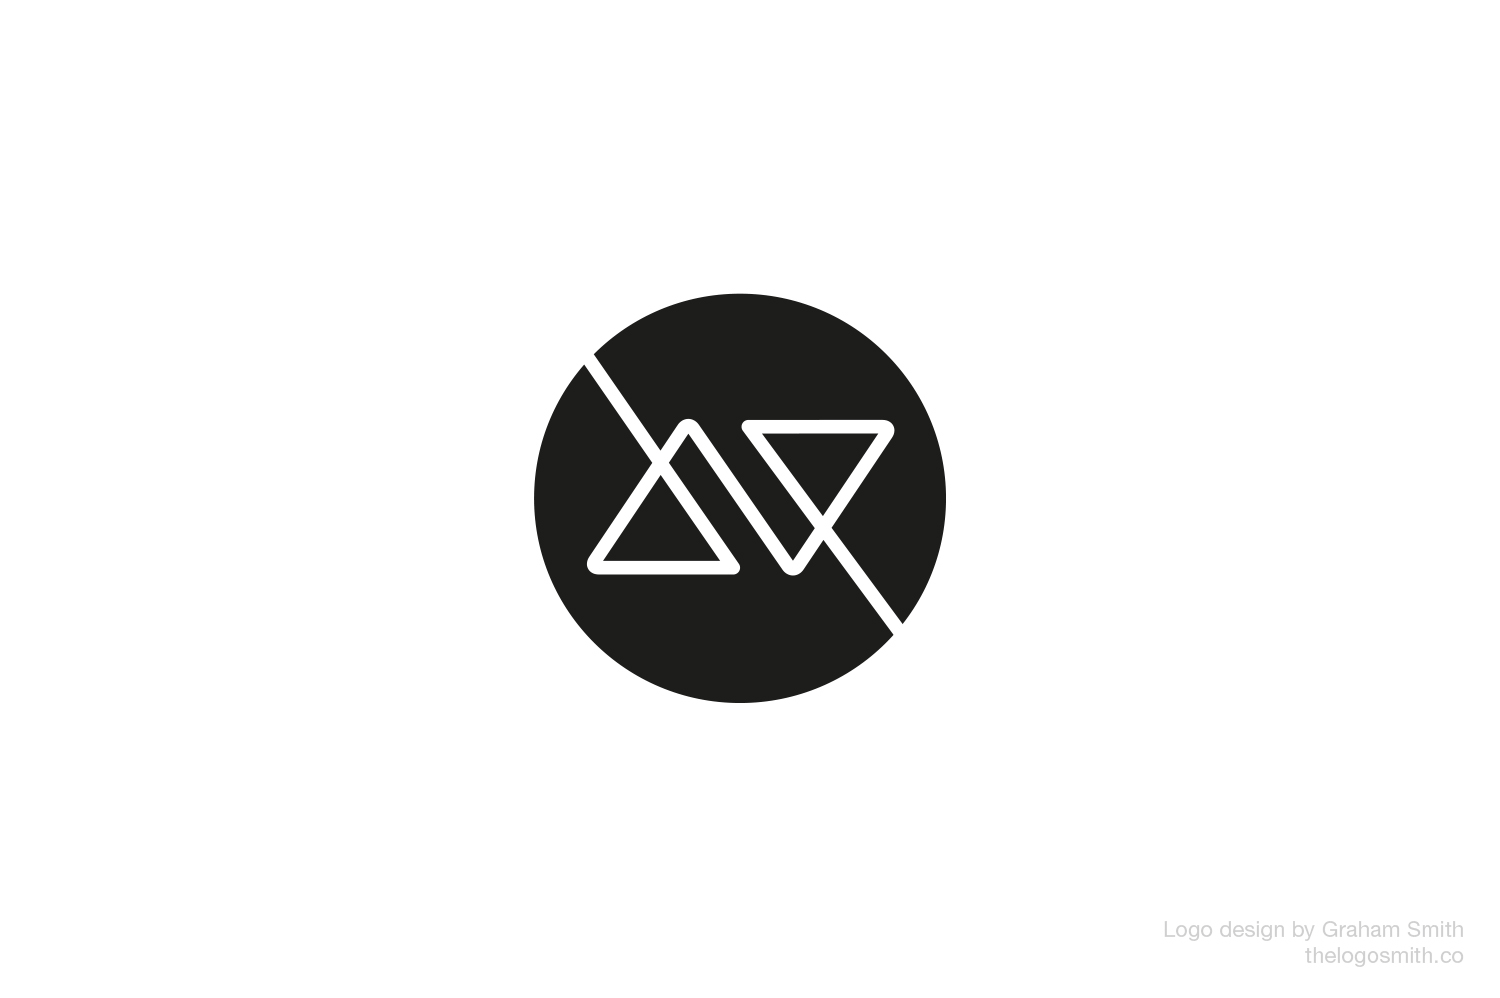 VA Logo - AV or VA Logo Design for Sale | V I A | Logo design, Logos, Design